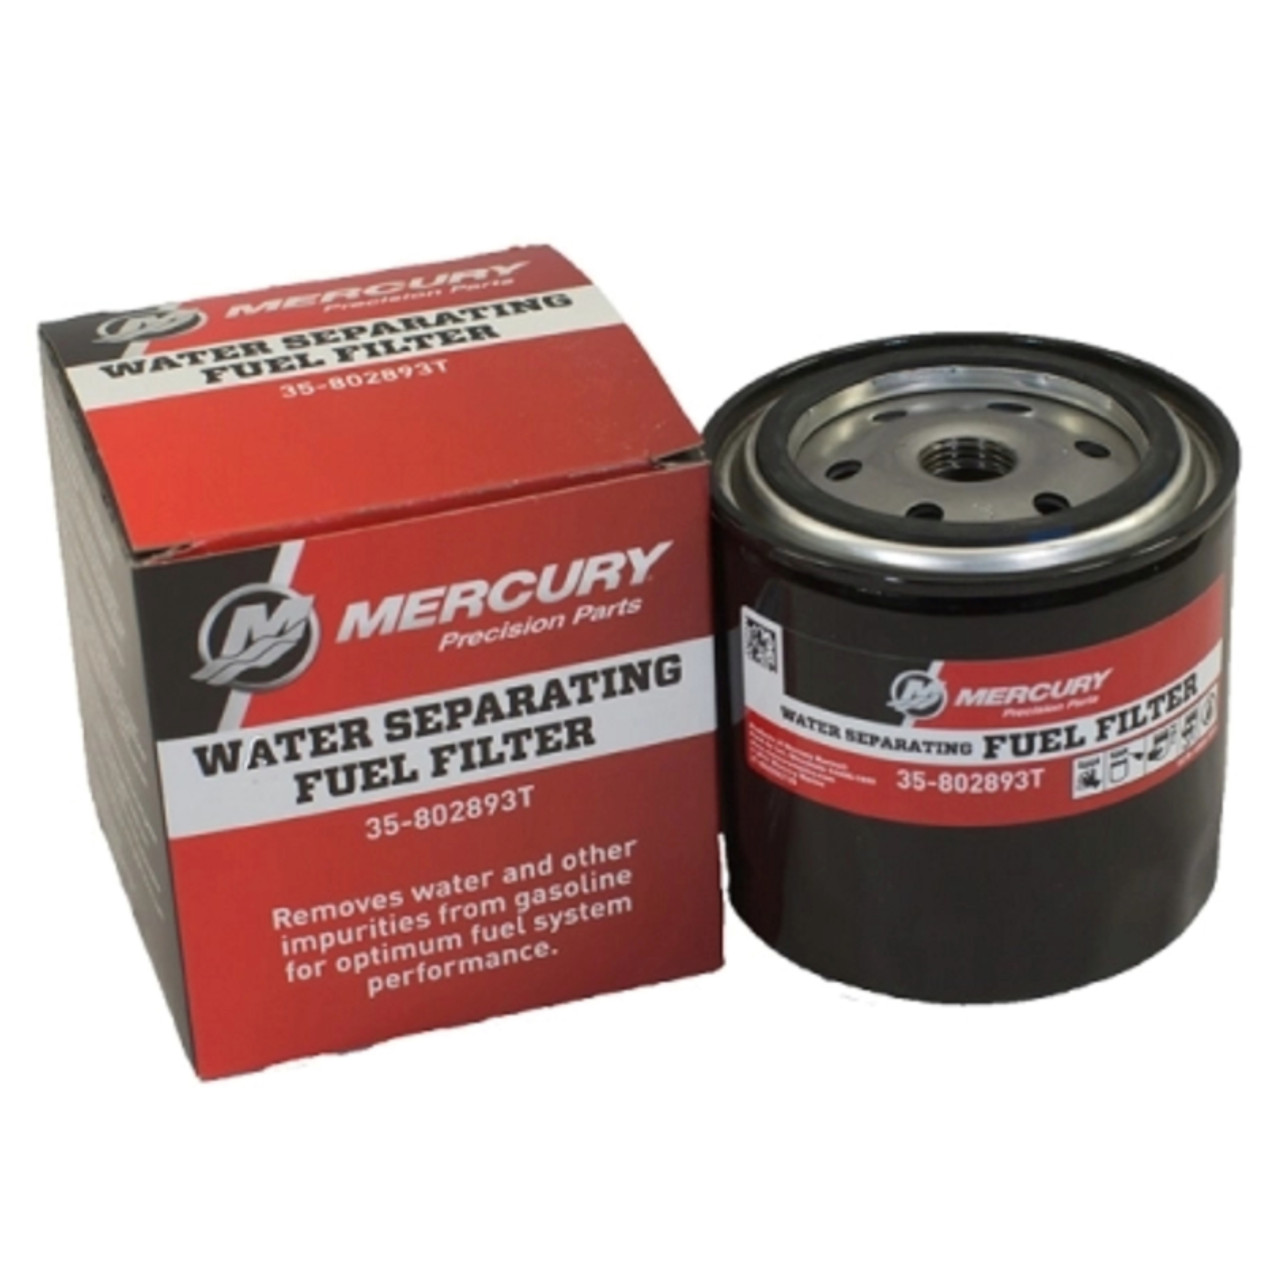 Mercury Marine Mercruiser New OEM Water Separating Fuel Filter Set of 2 35-802893T